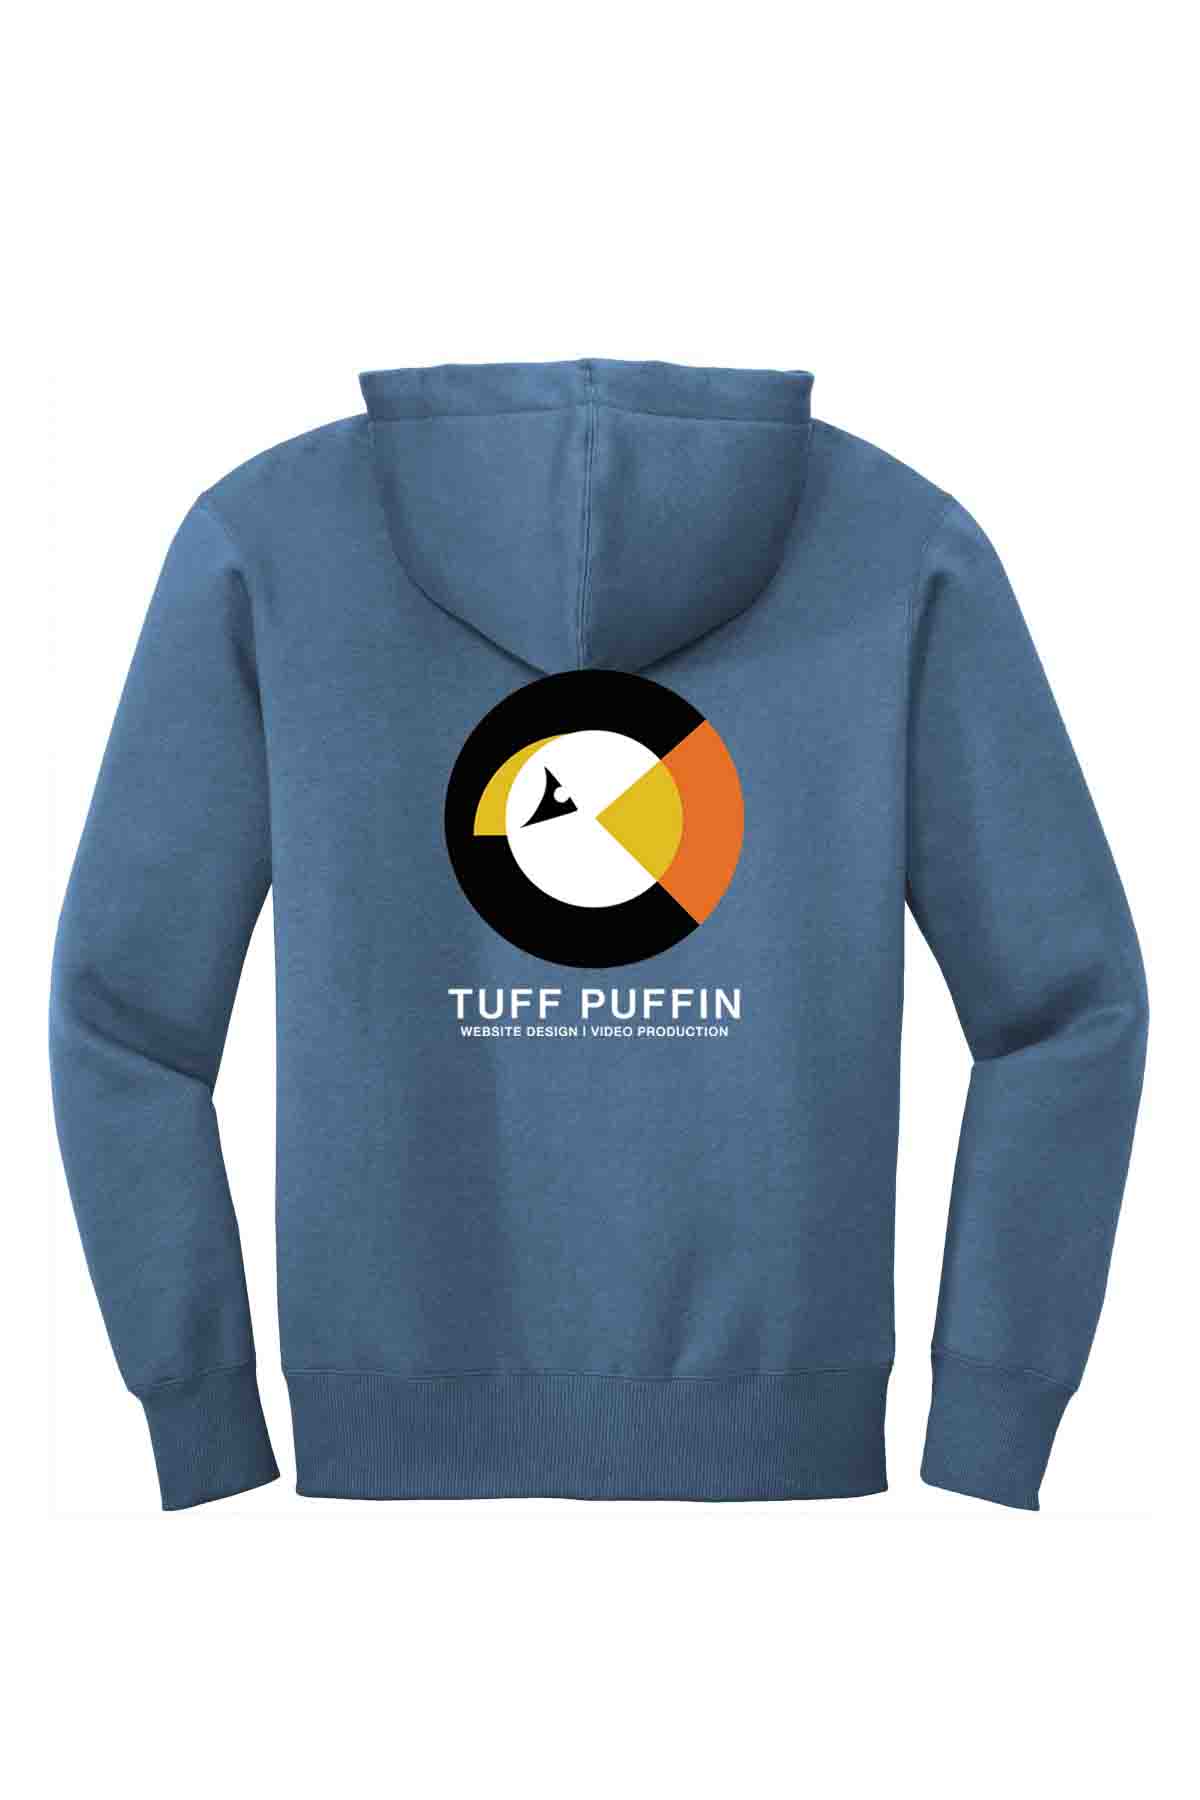 Tuff Puffin - Hooded Zip Sweatshirt